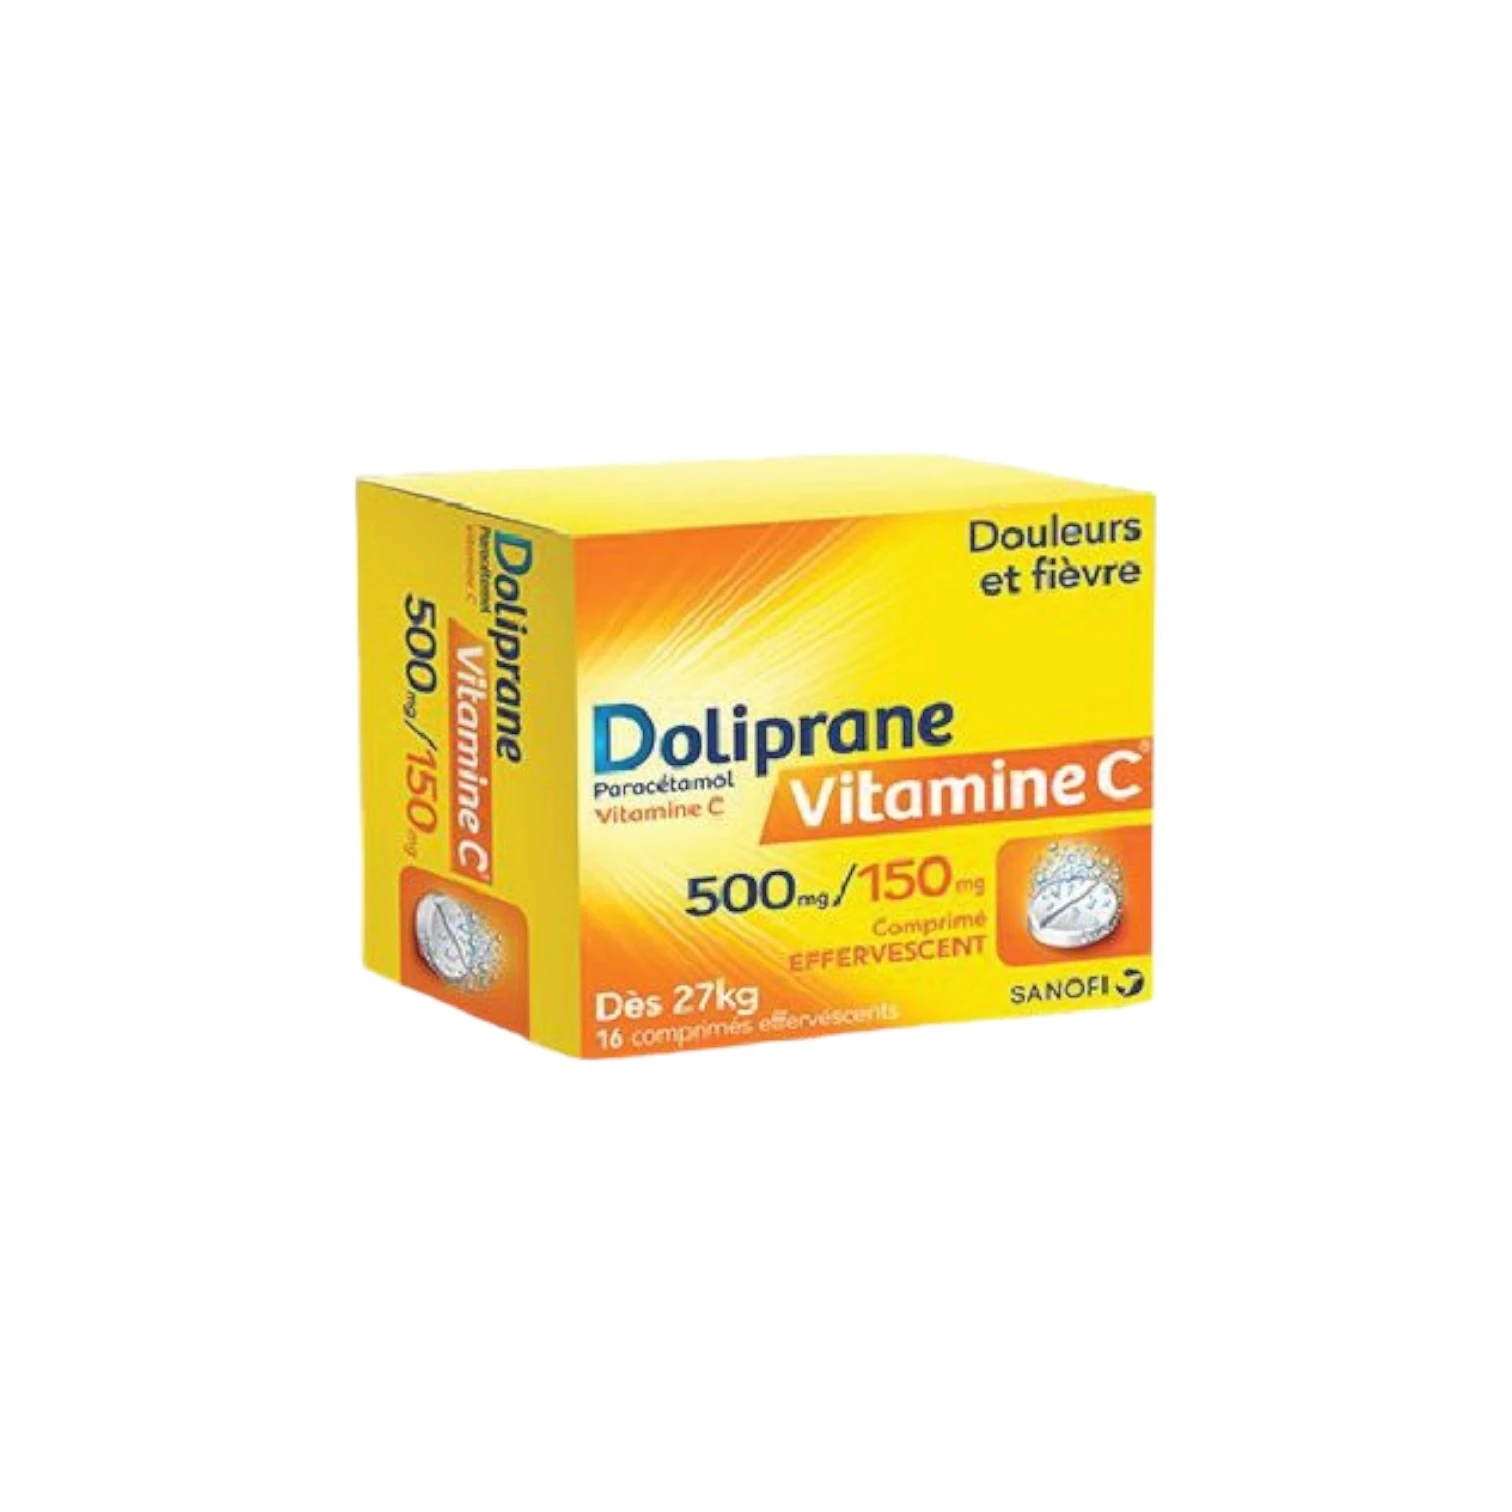 Doliprane Vitamin C 500mg/150mg 2×8Tab/Box